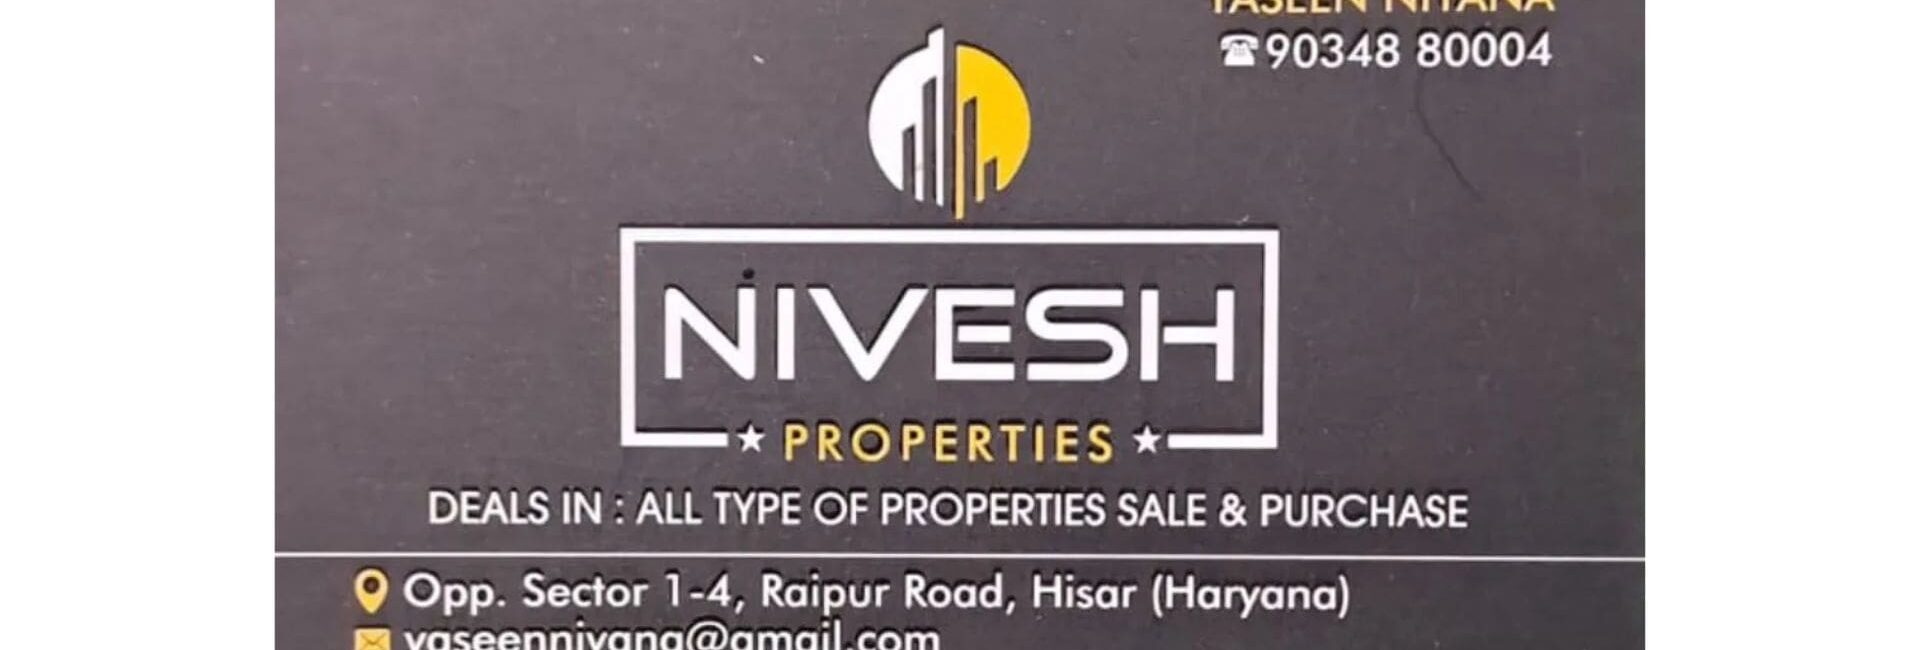 Nivesh Properties - Real Estate Agent in Hisar